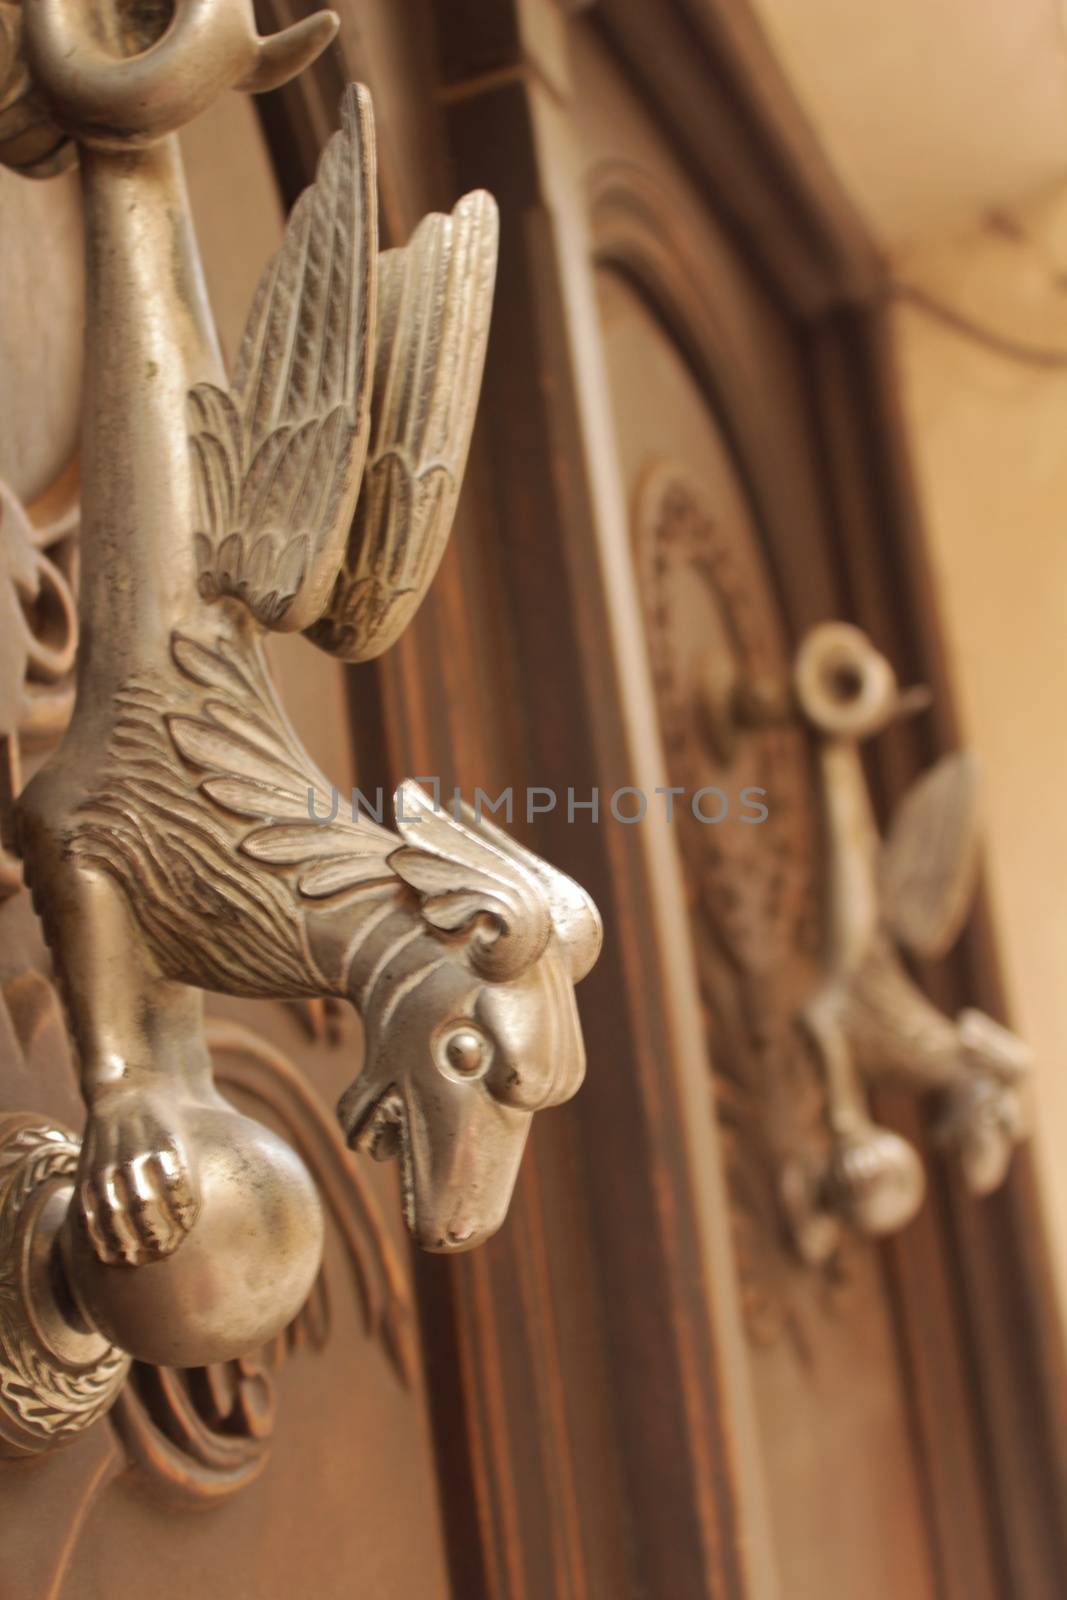 Golden door knocker with mythological dragon shape on old wooden door by soniabonet